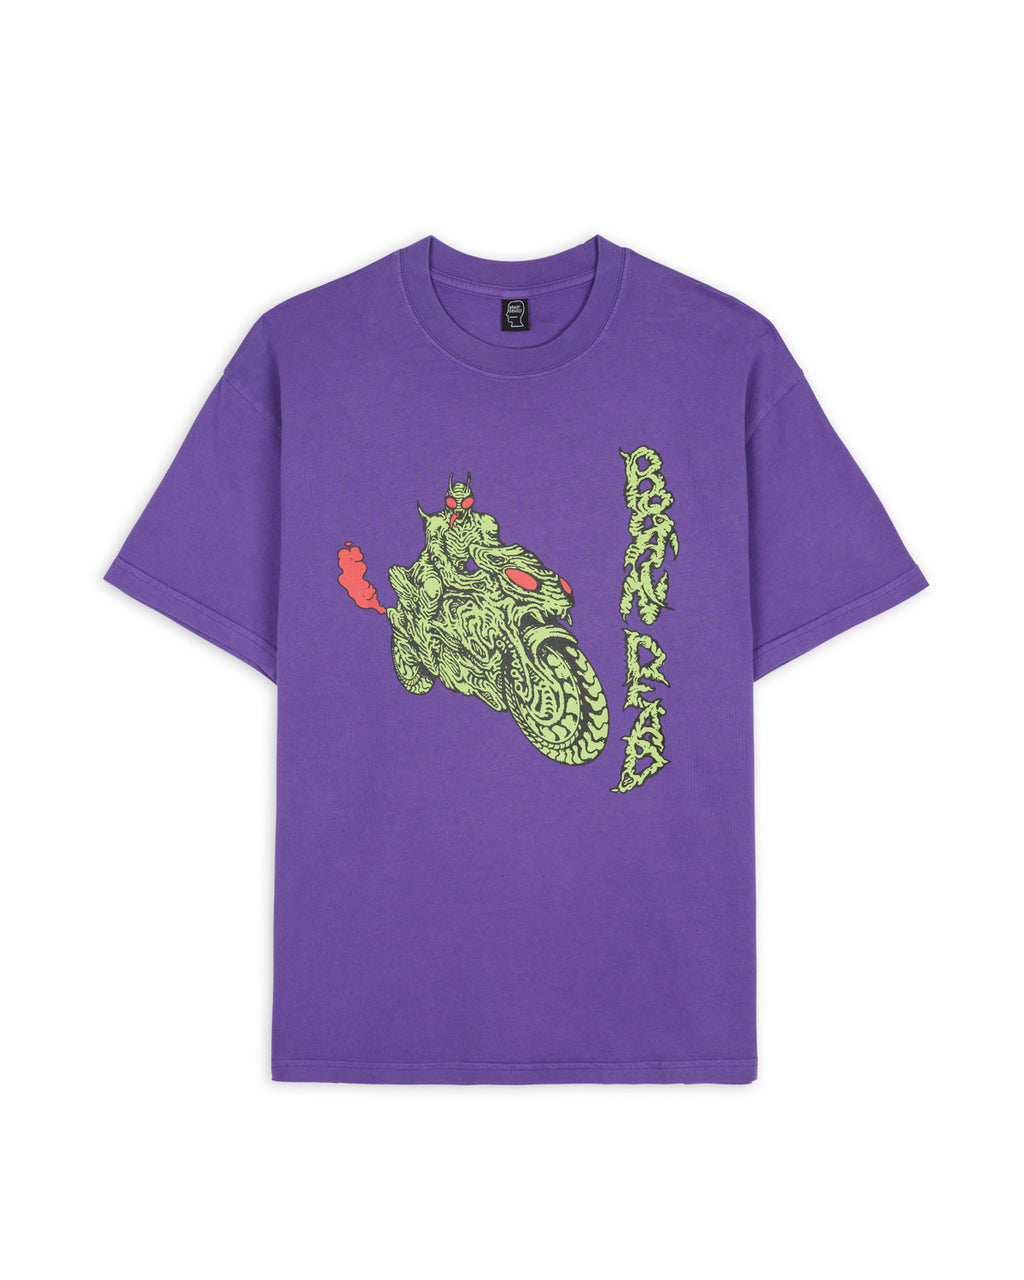 Goon Rider T-shirt - Purple 1